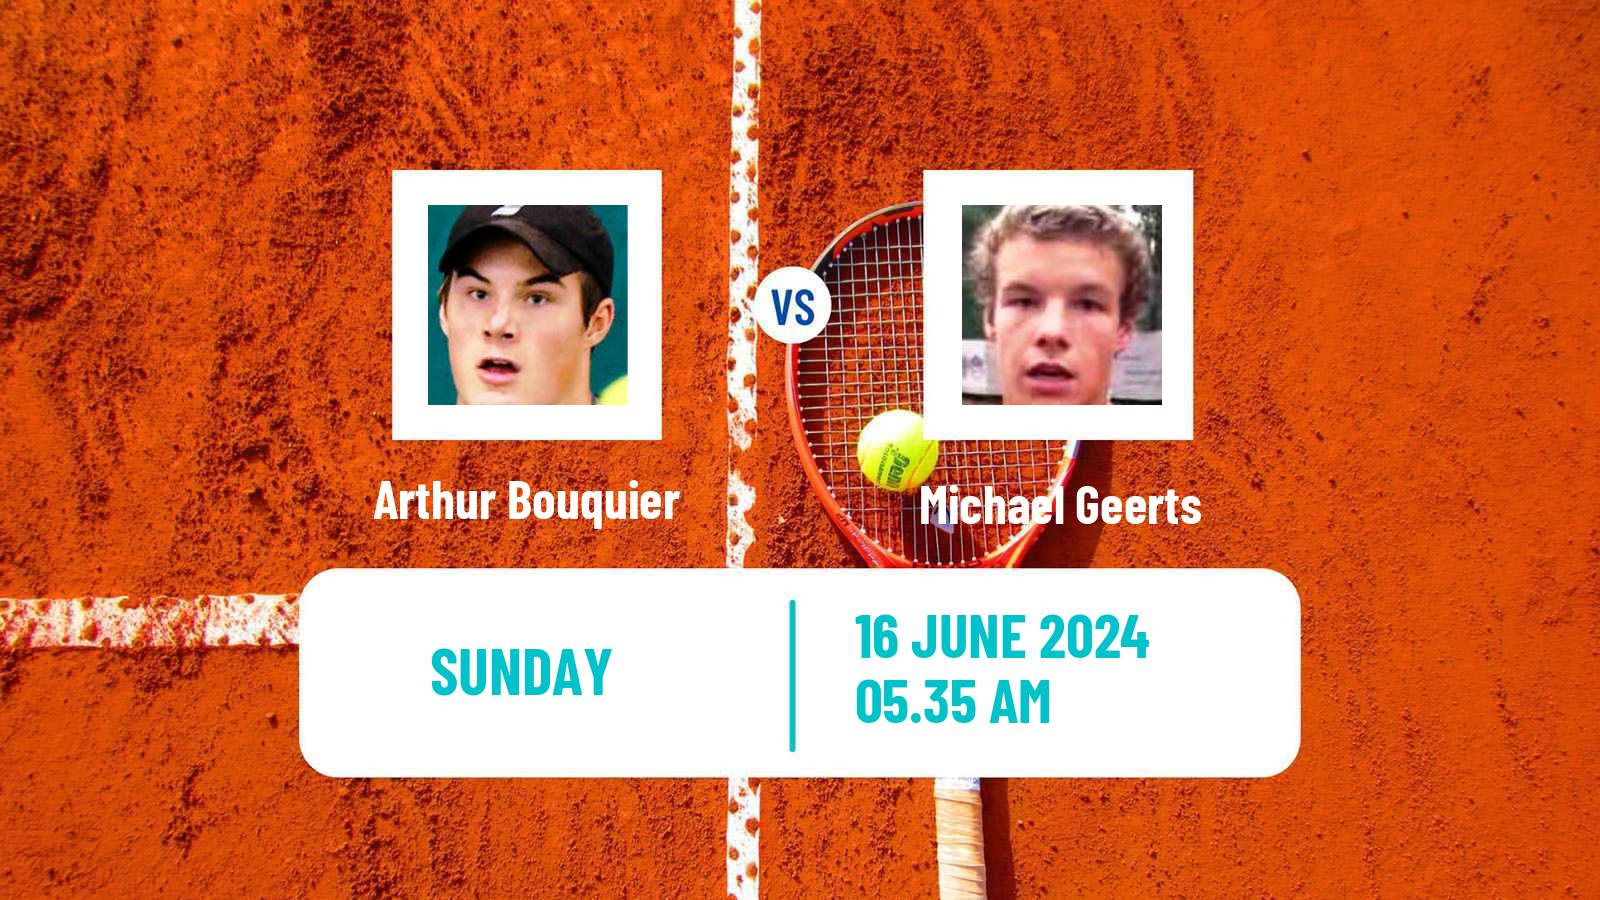 Tennis ITF M25 Martos Men Arthur Bouquier - Michael Geerts